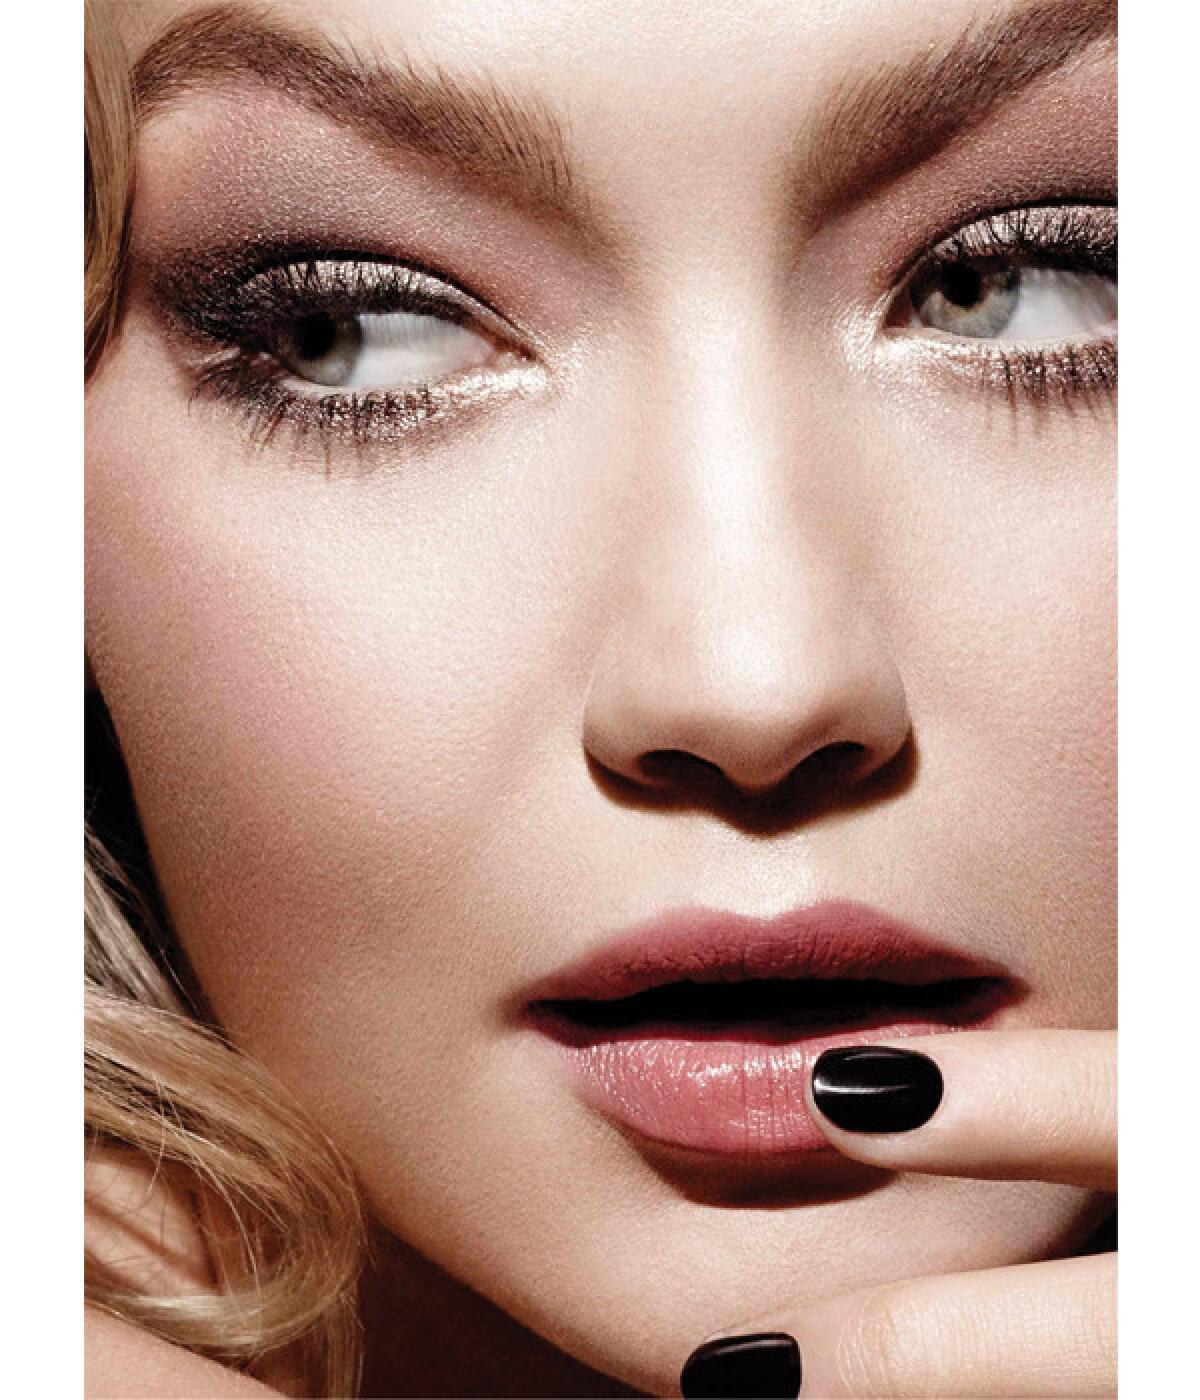 Tom Ford Beauty fall 2014 advertisement featuring model Gigi Hadid.